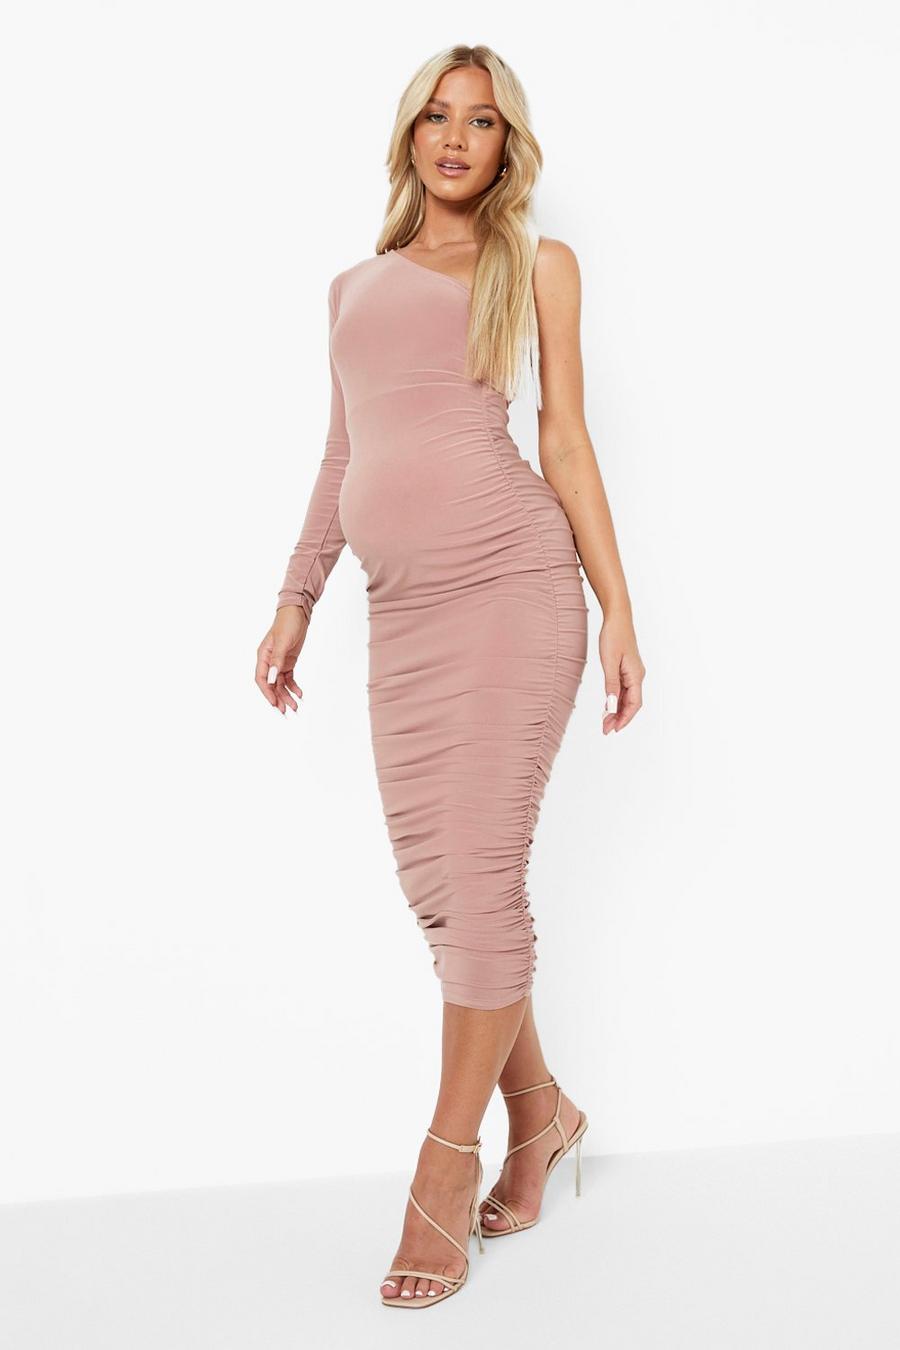 Blush pink Maternity One Shoulder Ruched Midi Dress